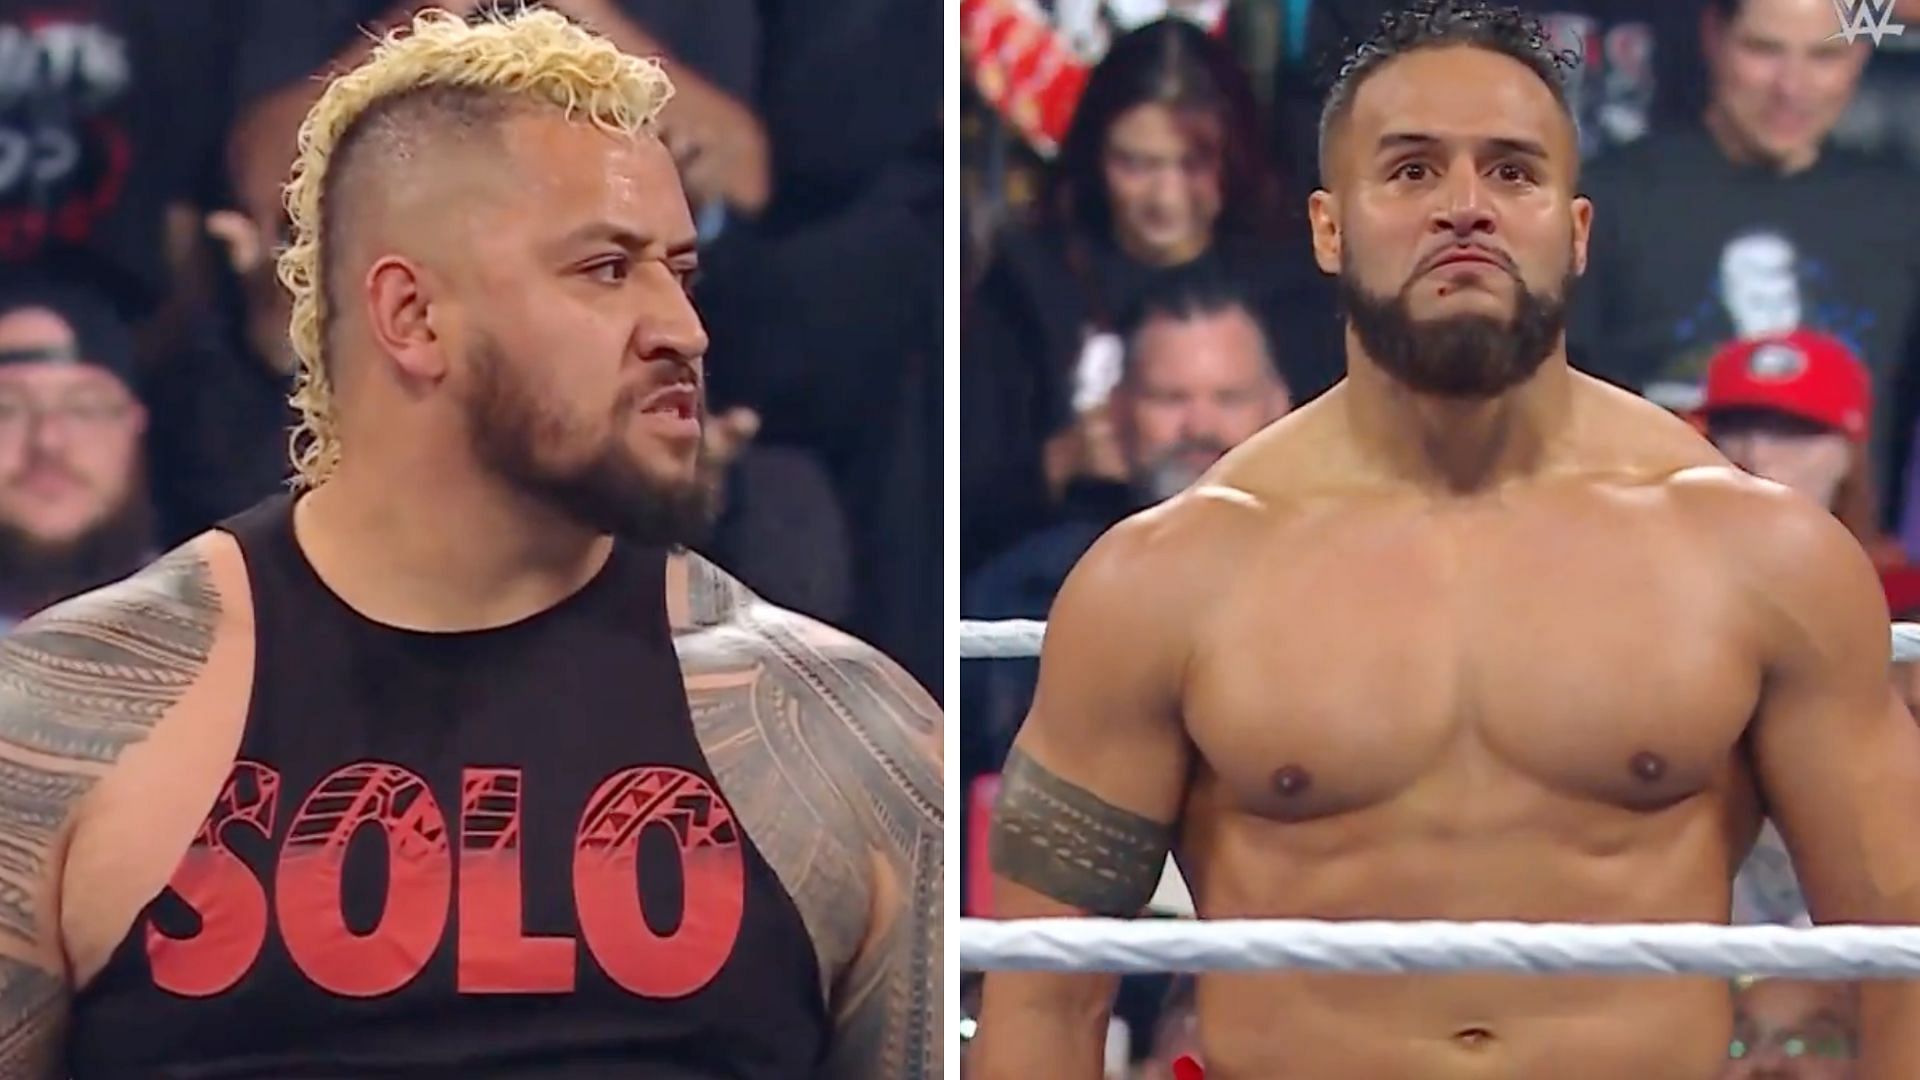 Tonga made his debut on SmackDown tonight.